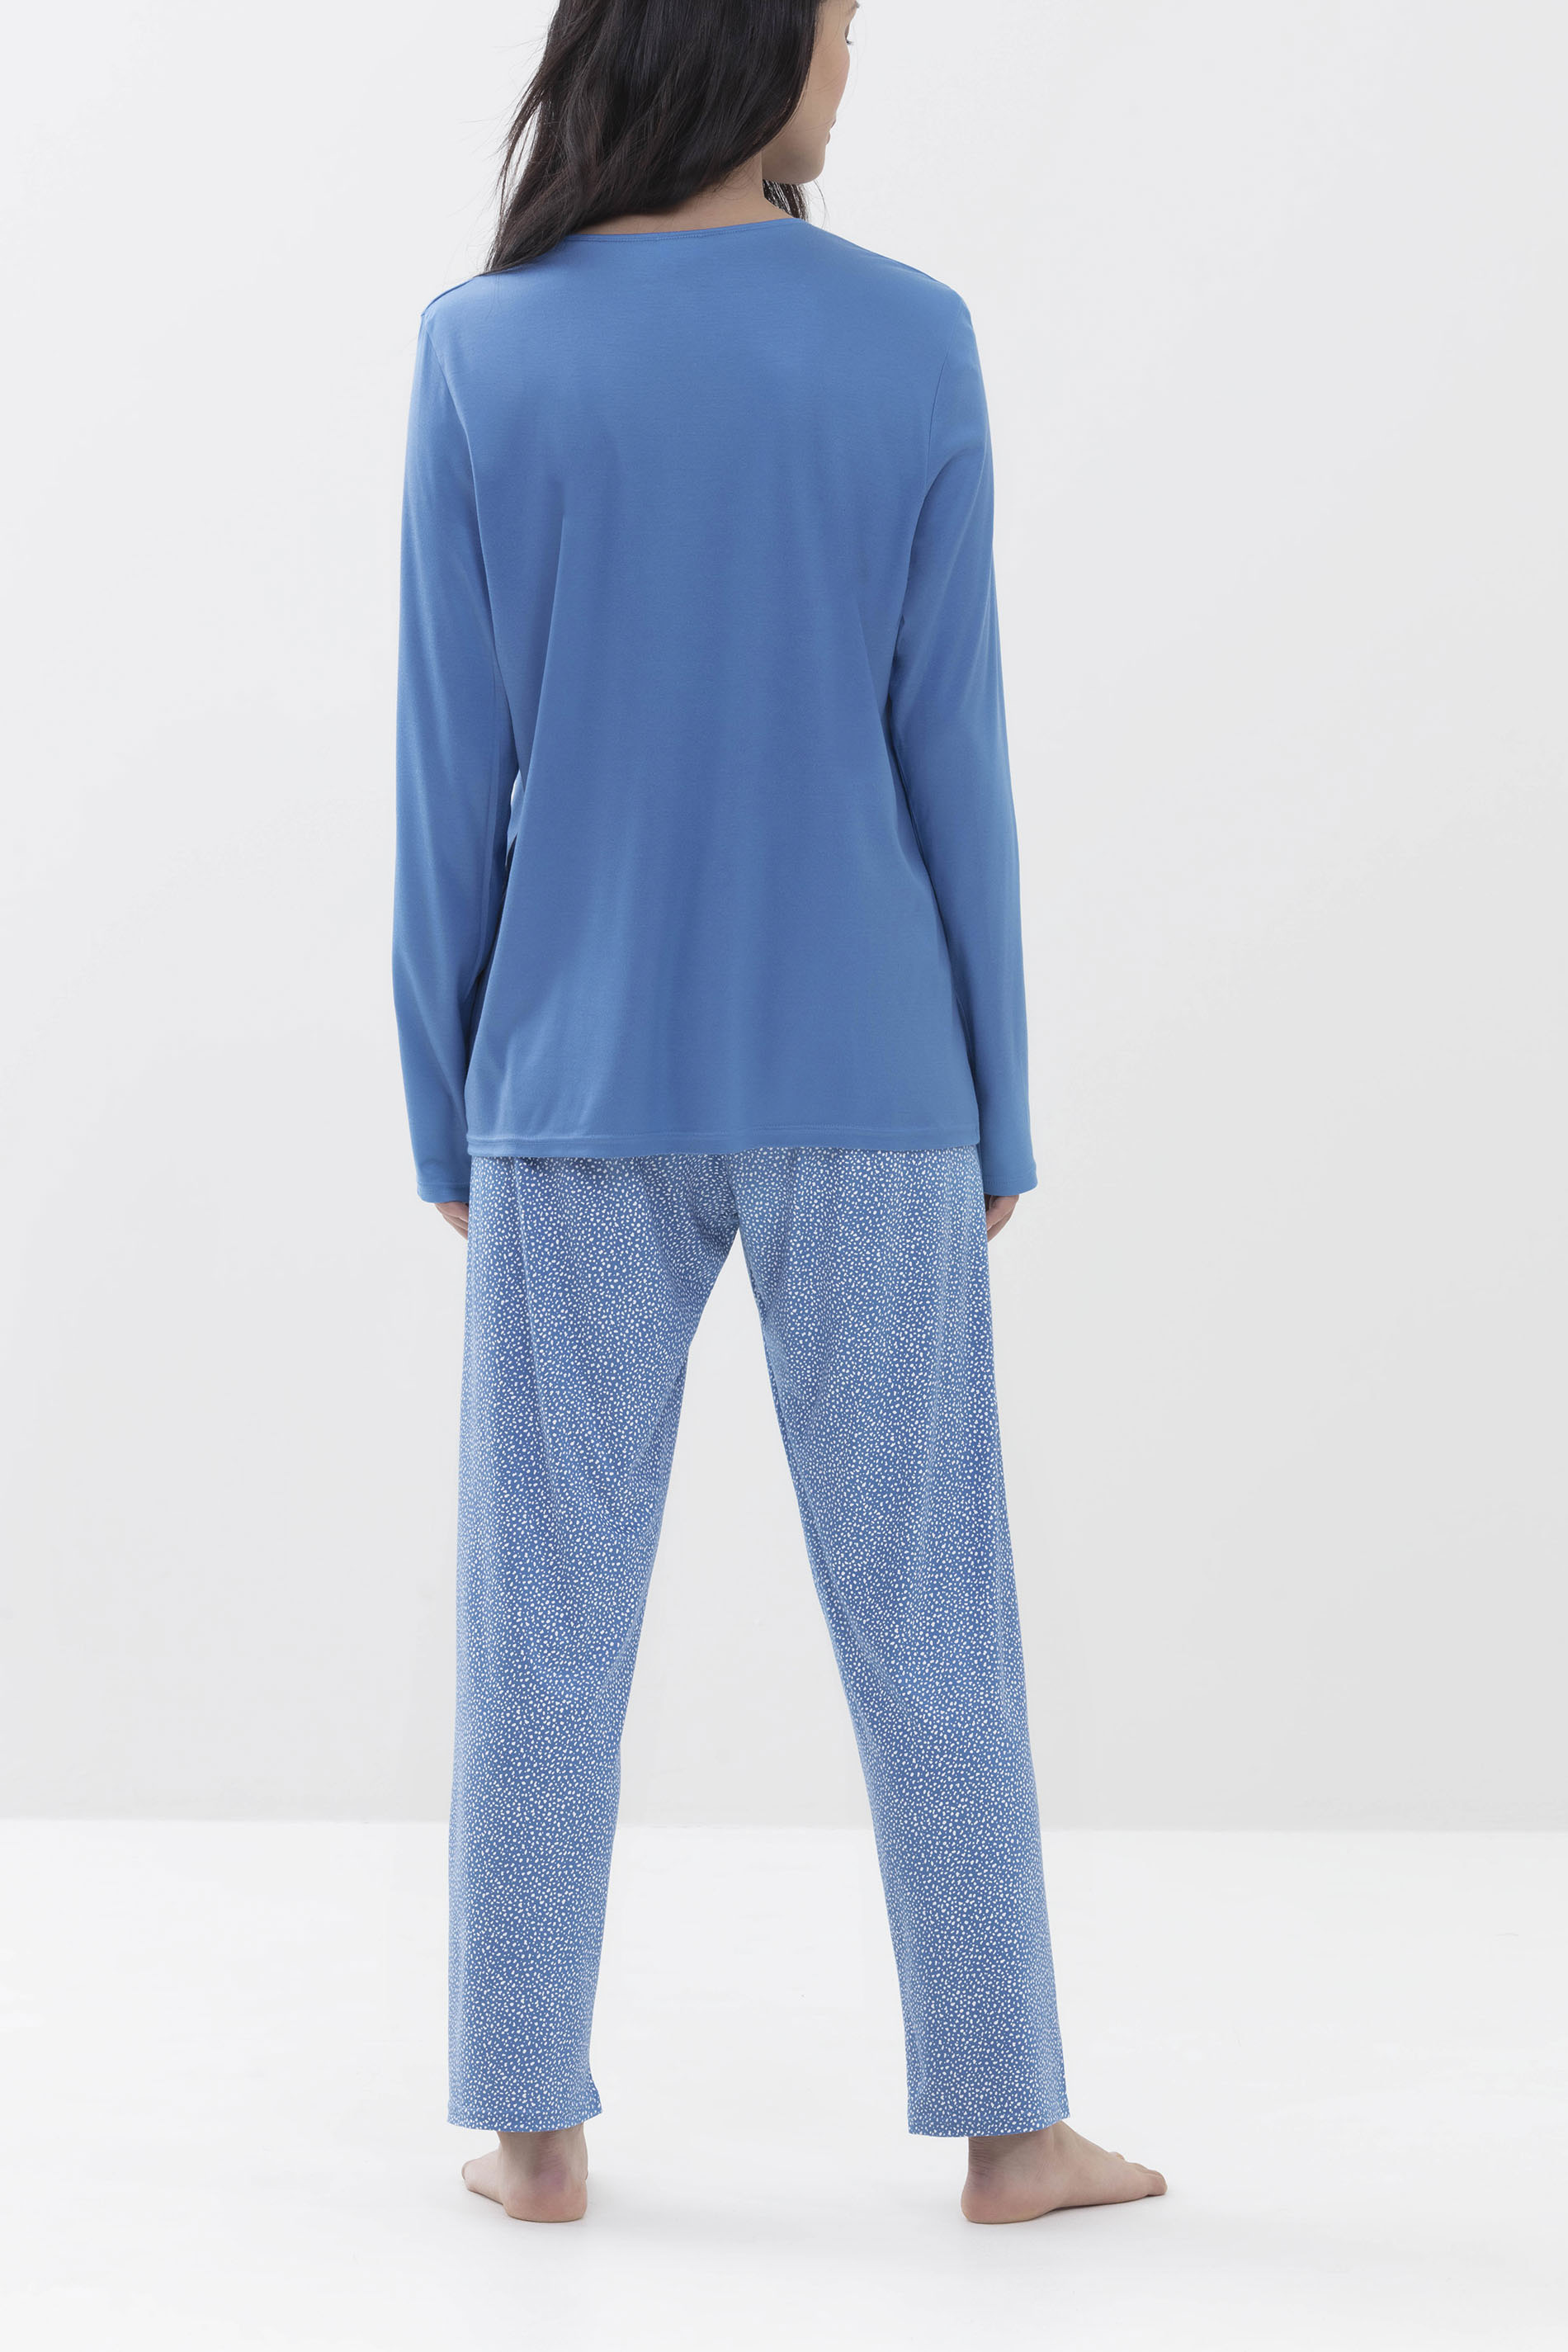 Pyjama in 7/8-Länge Ocean Blue Serie Elouisa Rückansicht | mey®